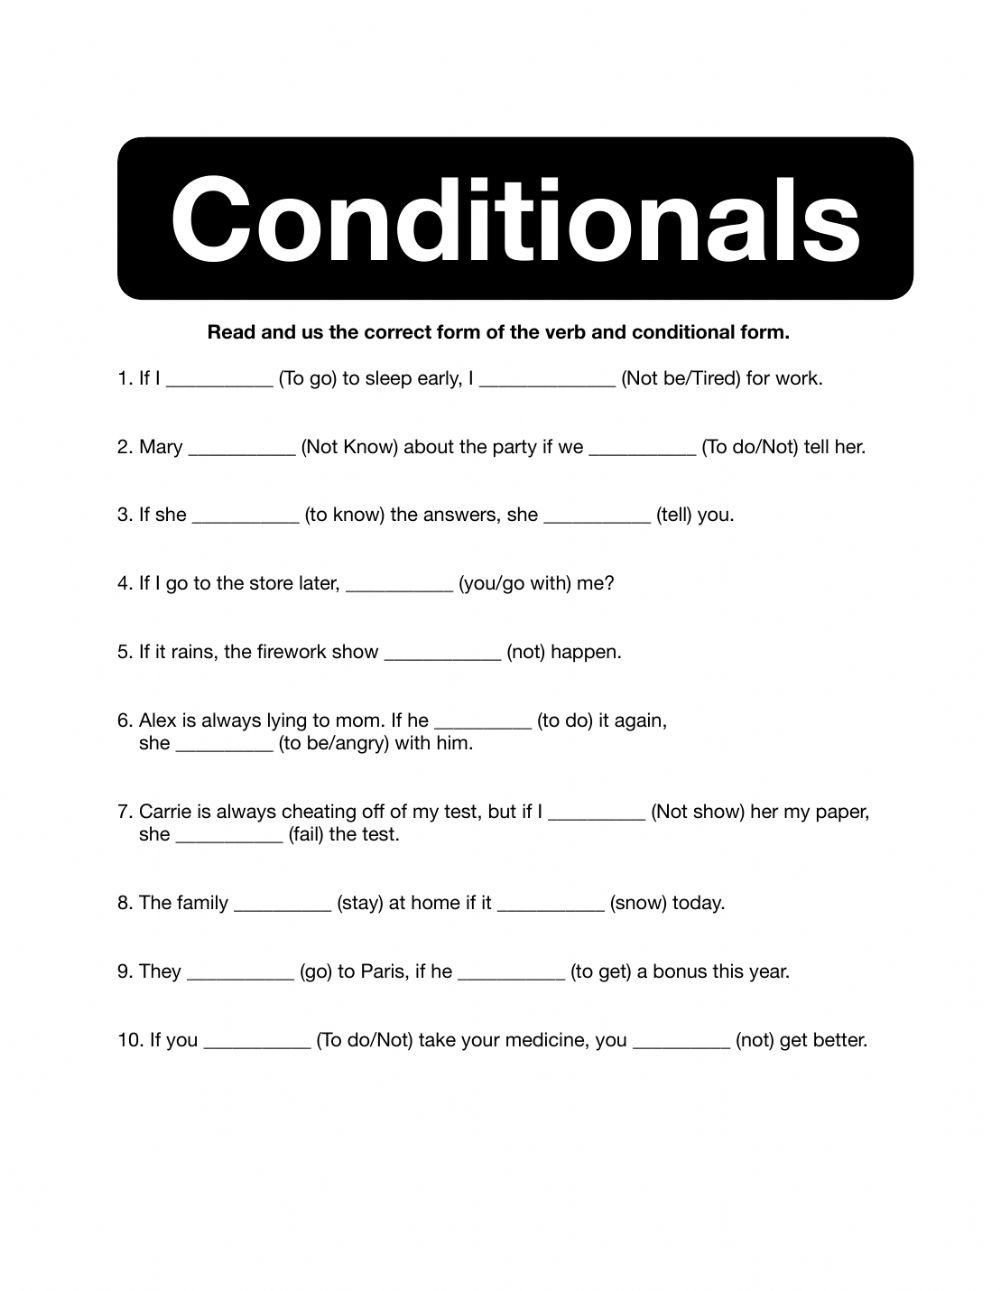 Conditionals 1